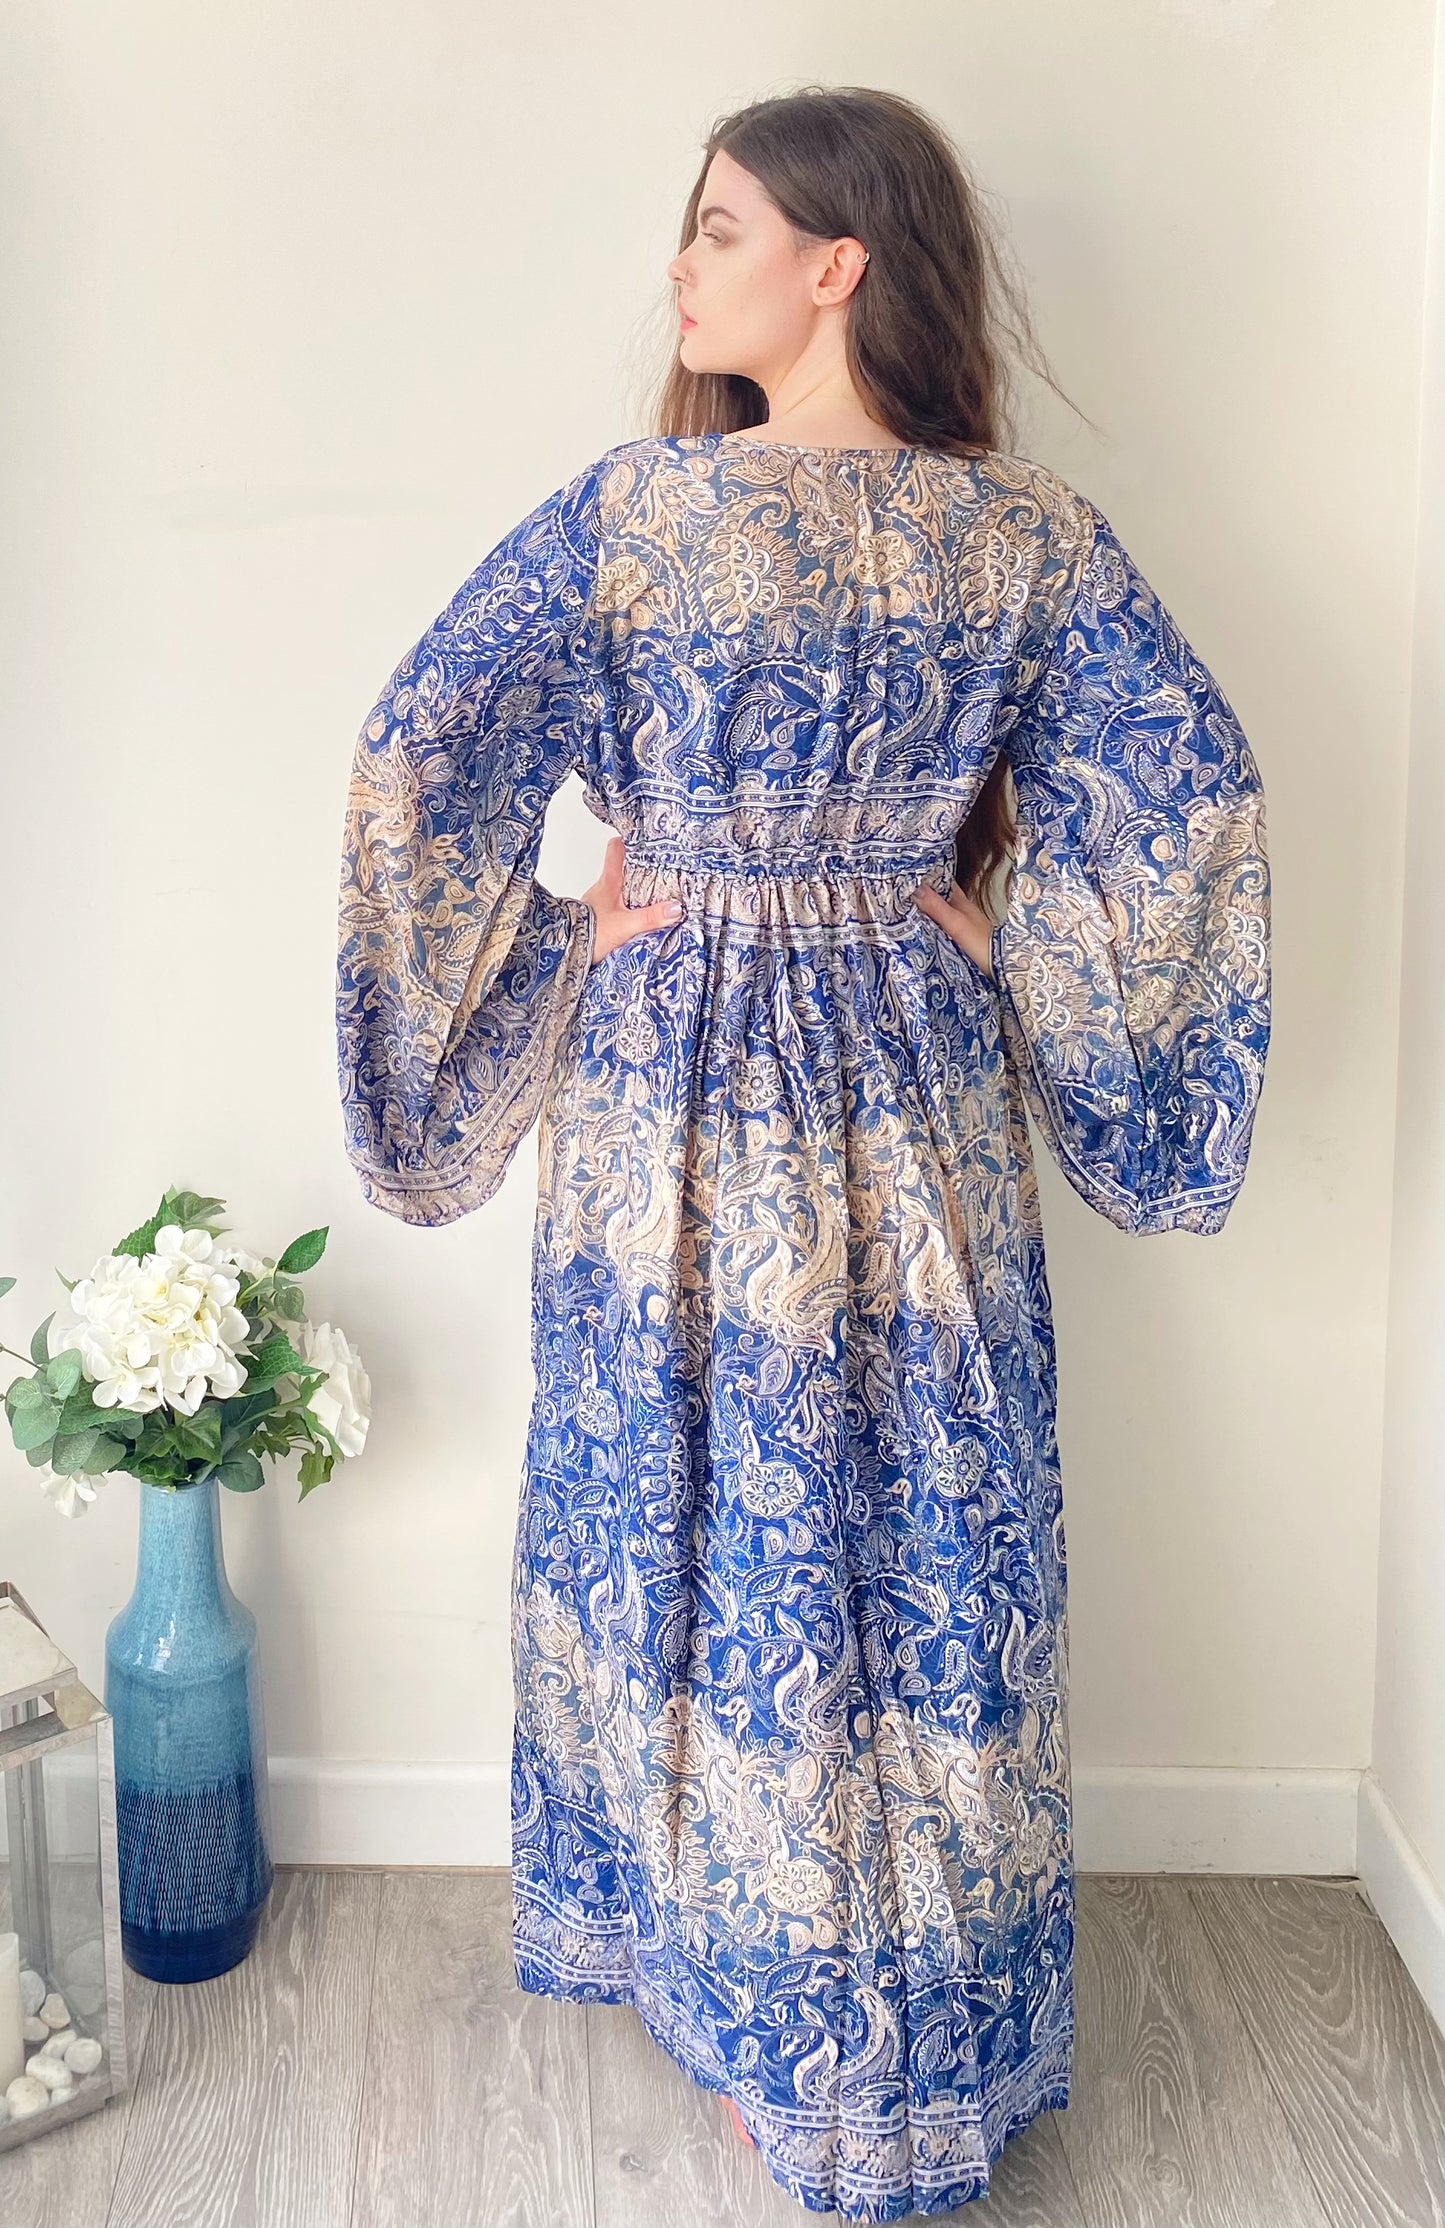 Nova cream blue paisley-print silk maxi dress free size UK8-16DRESSES